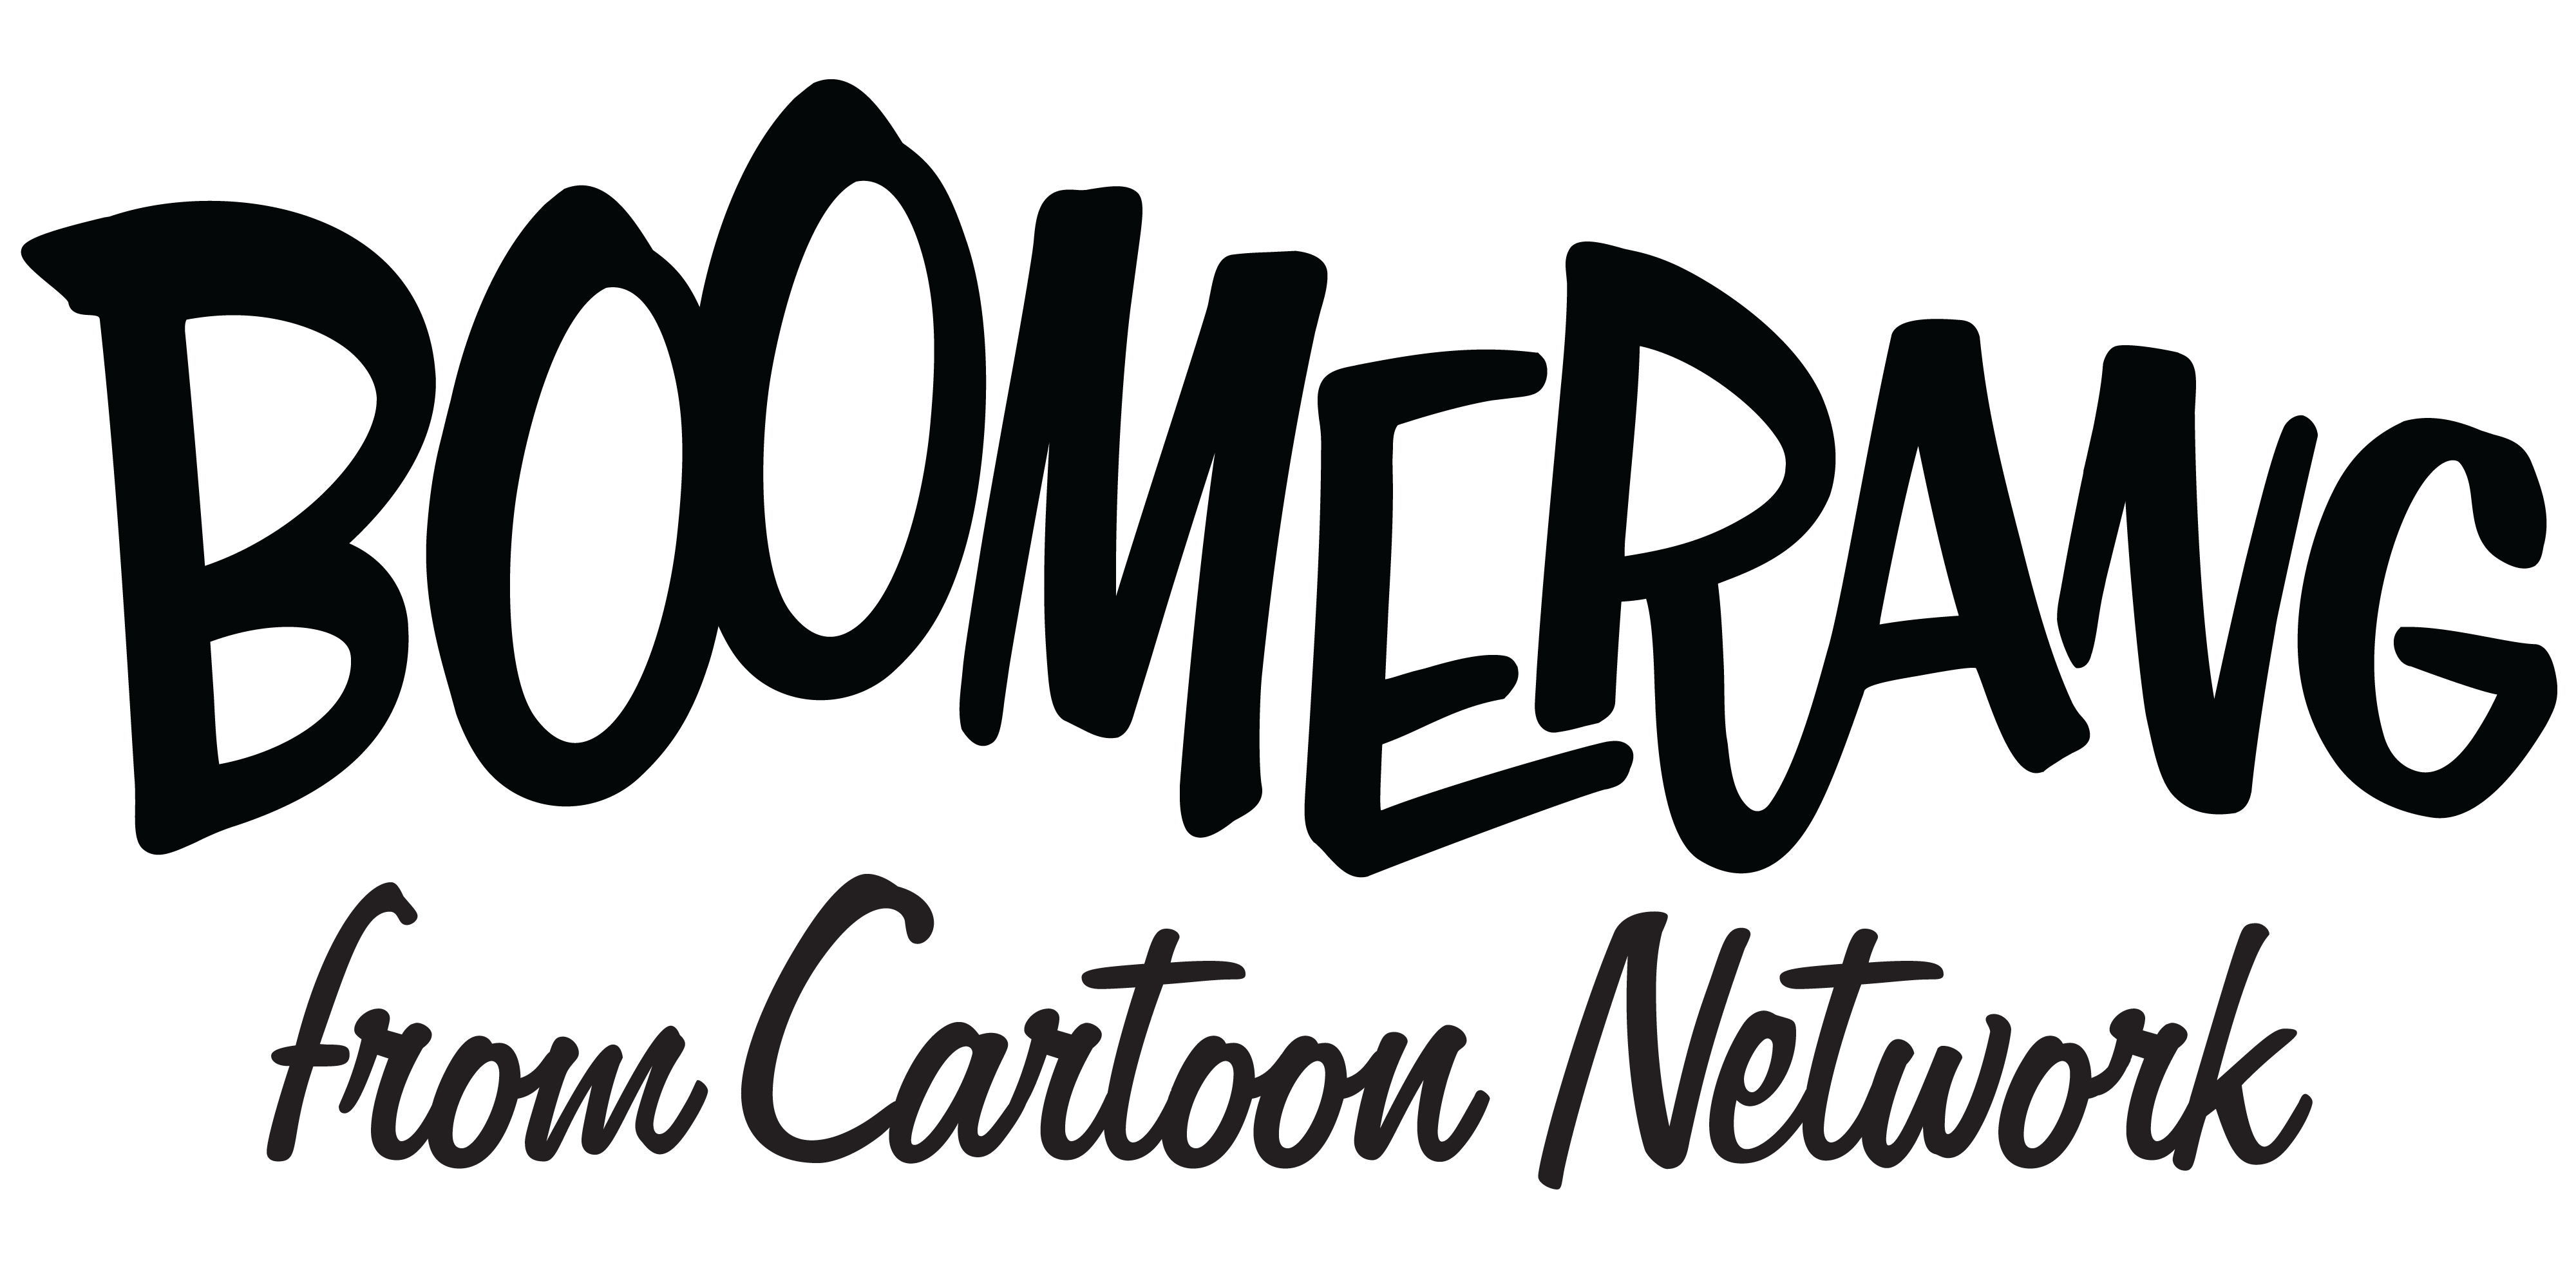 Boomerang From Cartoon Network Logo - File:BoomerangLogo.png - Wikimedia Commons